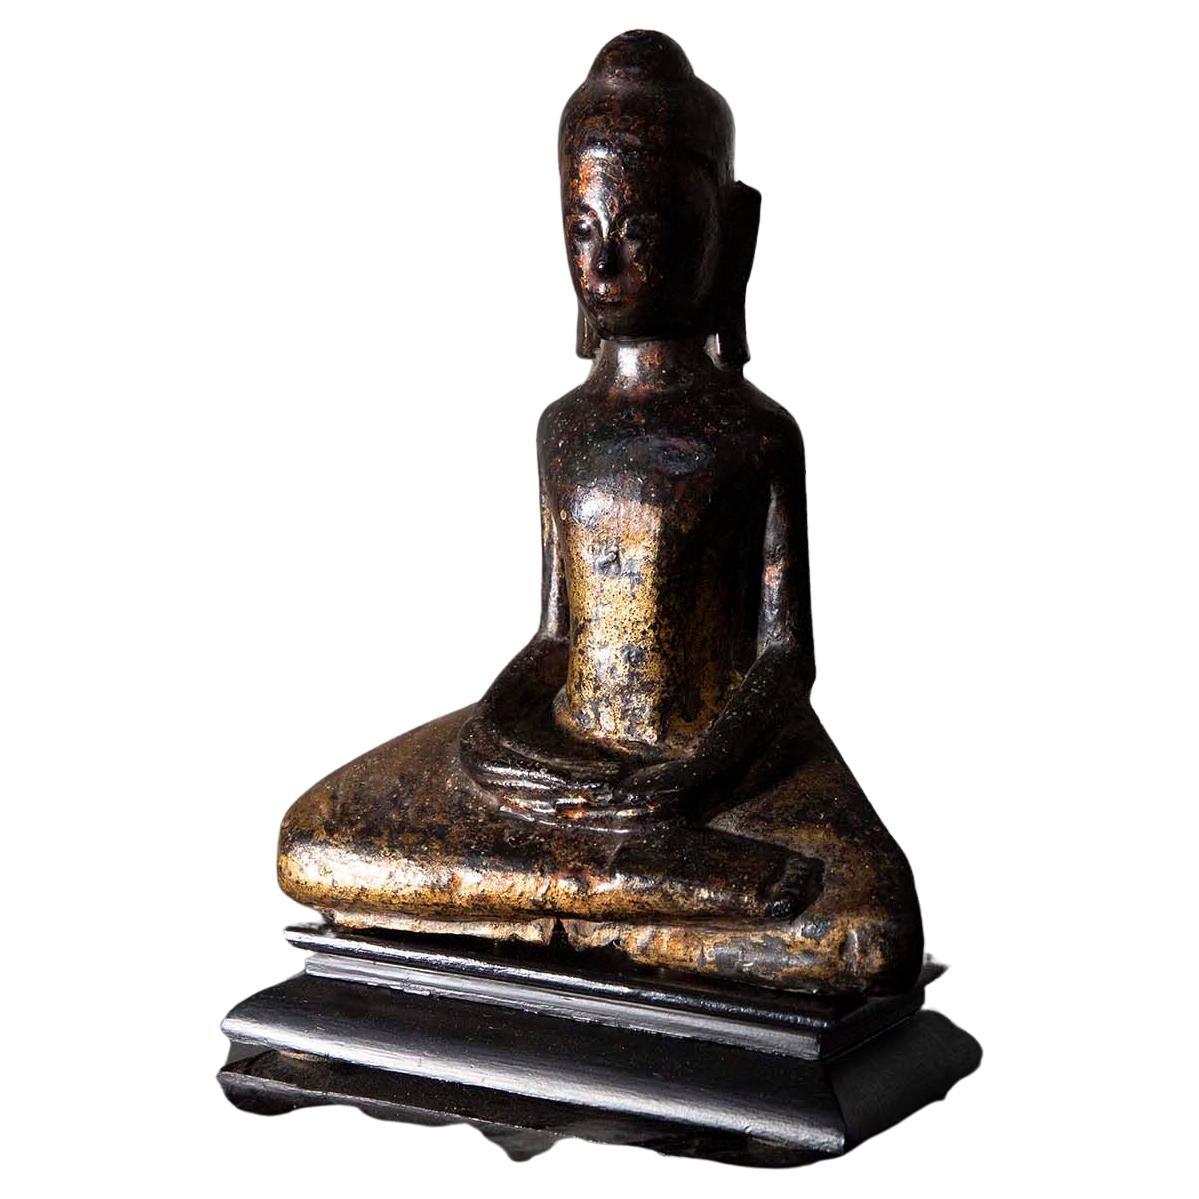   Dvaravati Meditation Buddha Statue in antique Thai 